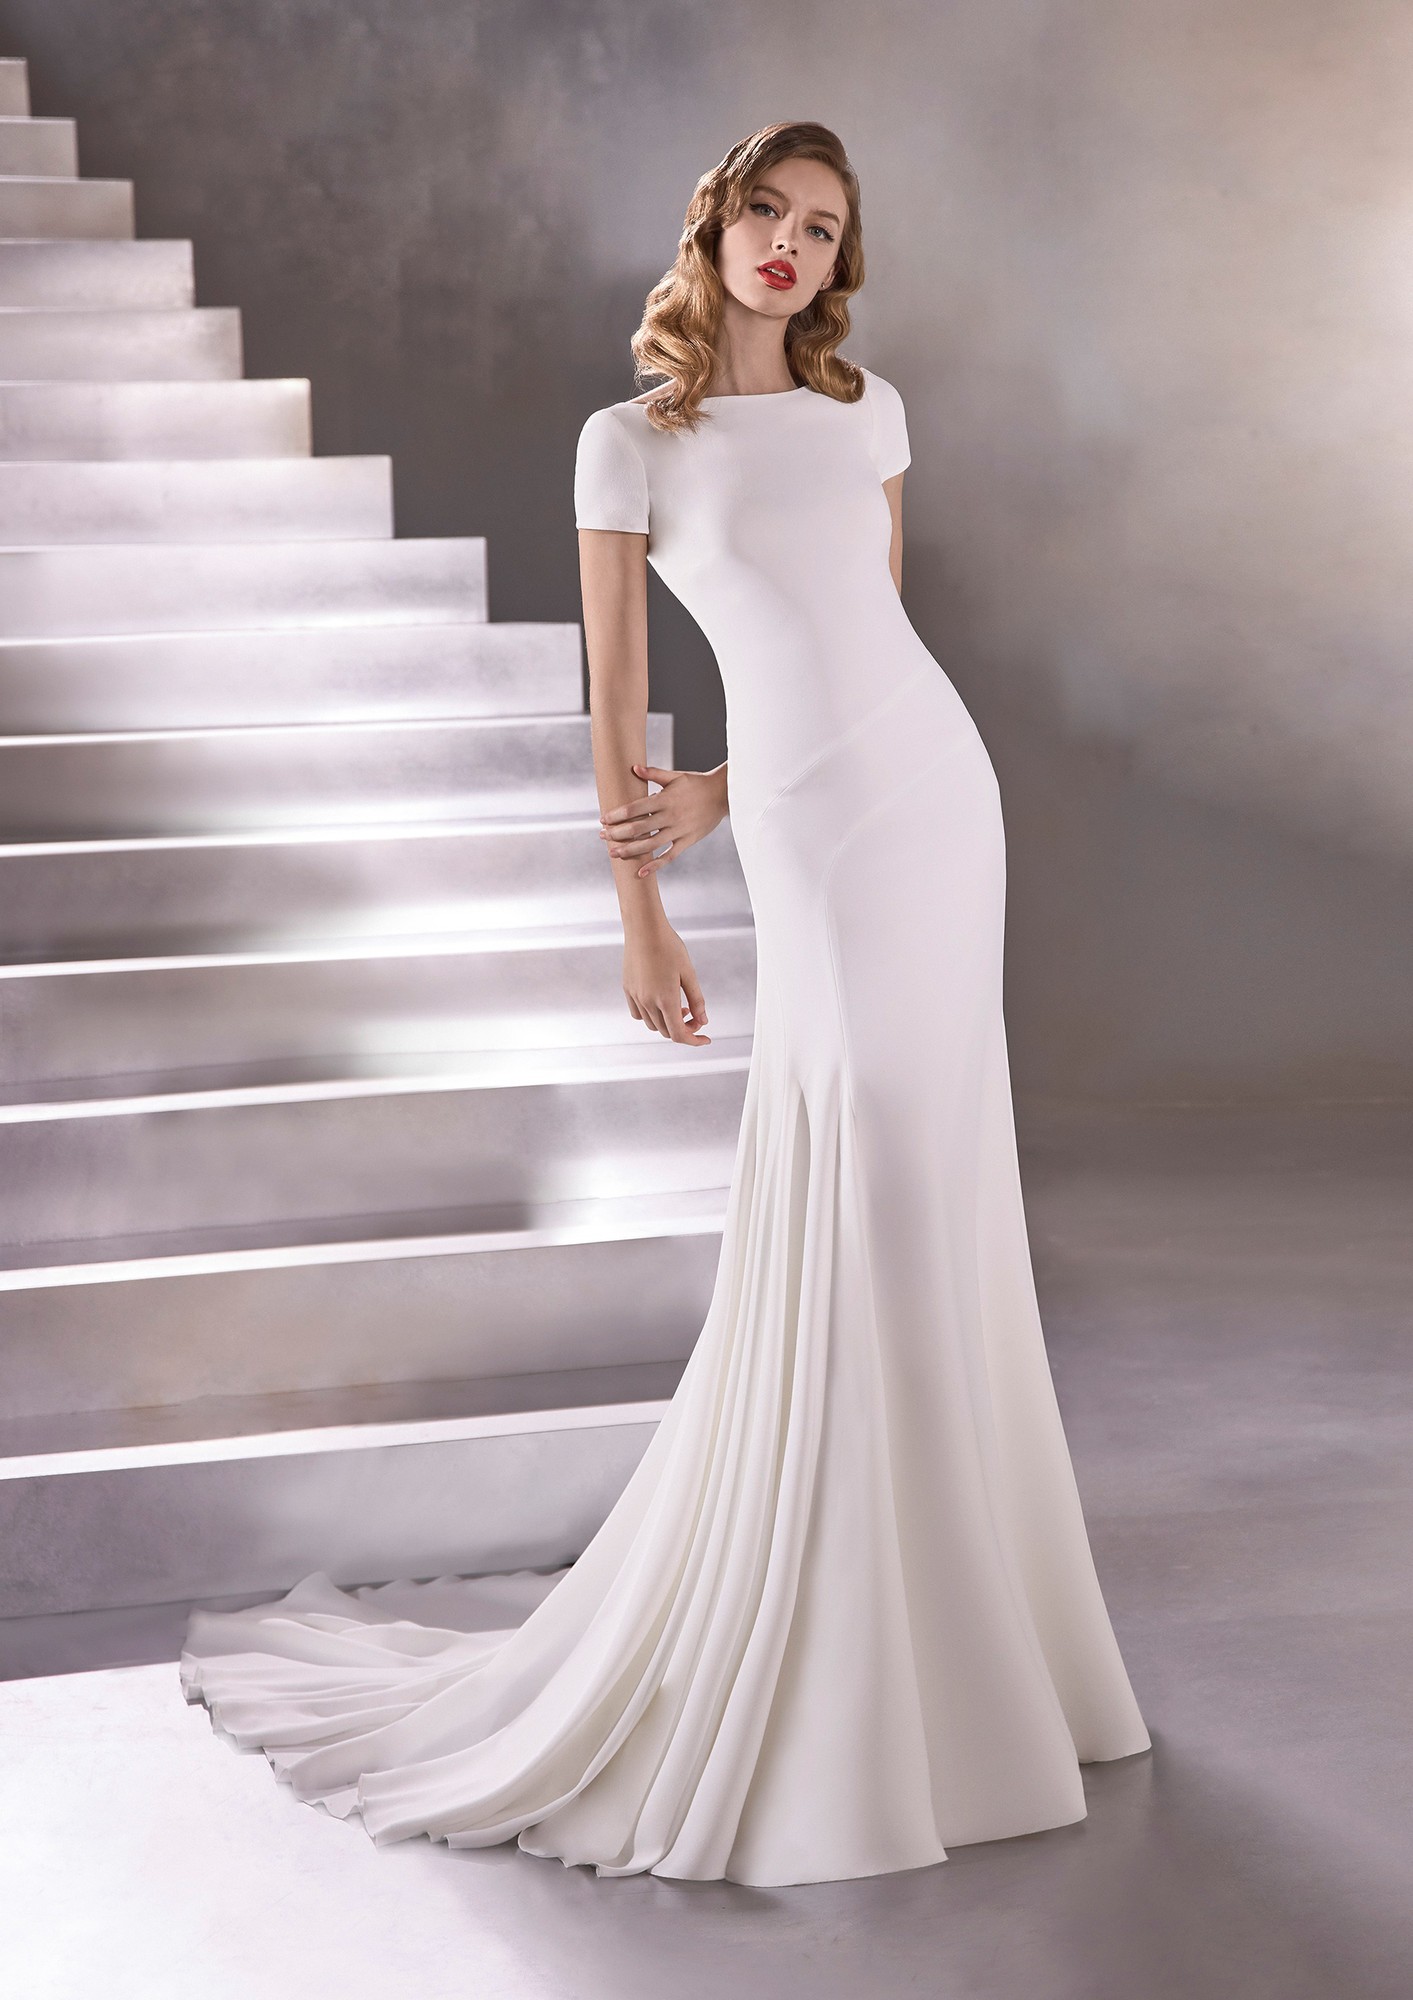 SUPERNOVA Wedding Dress from Atelier Pronovias - hitched.co.uk